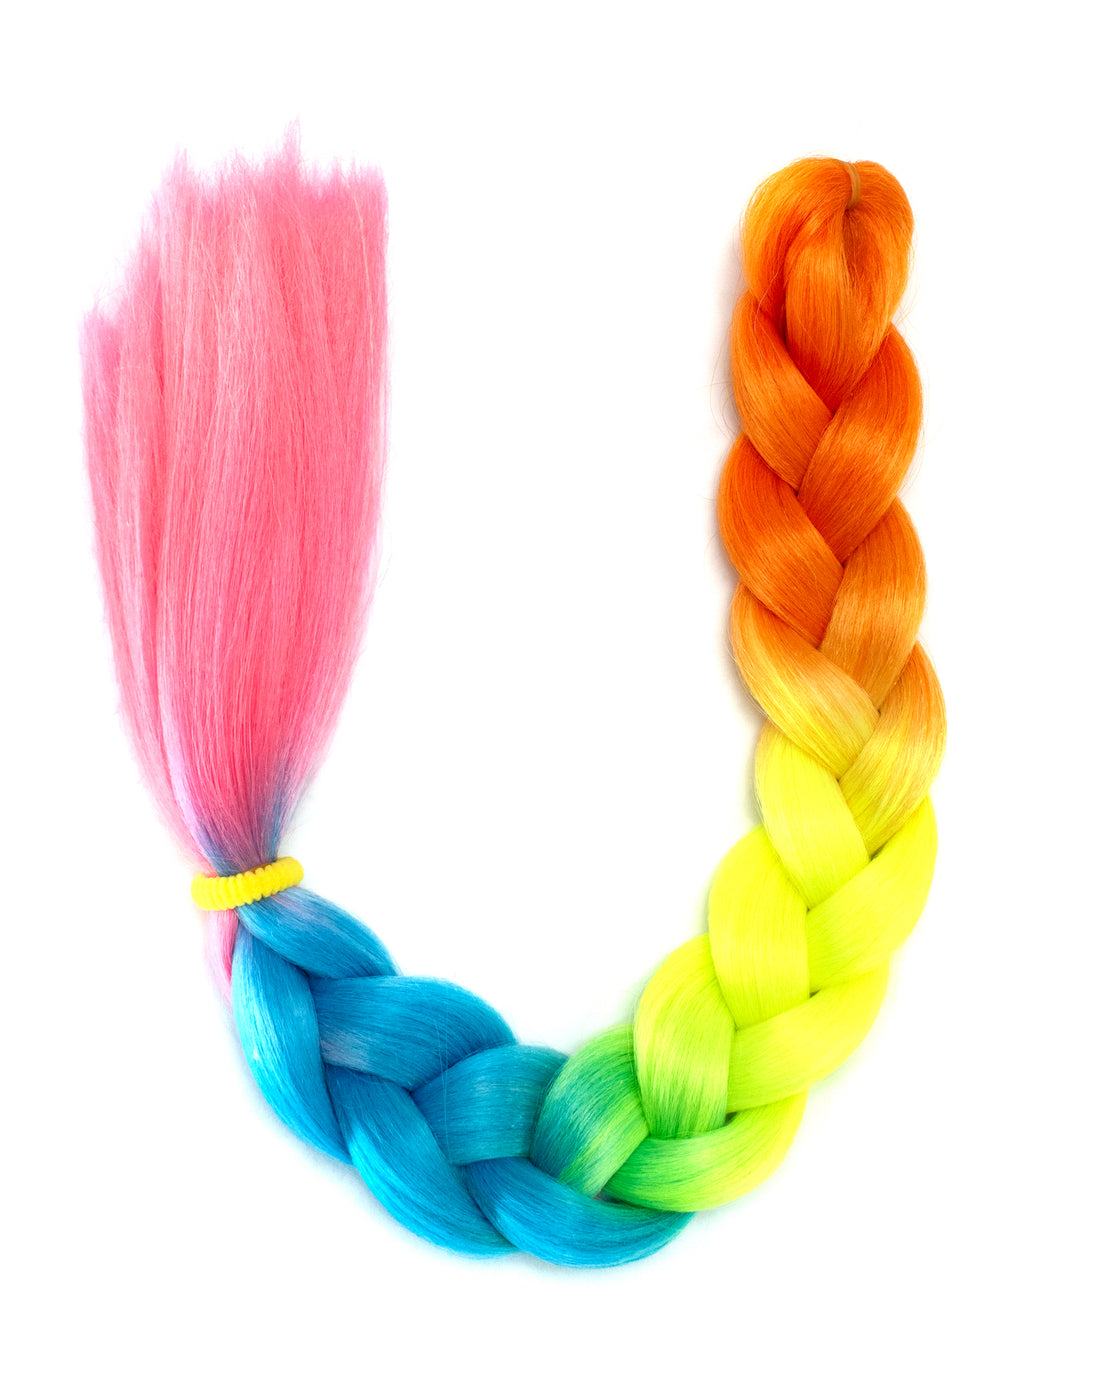 Stellar - Rainbow Ombre Braid-In Hair - Lunautics Braid-In Hair